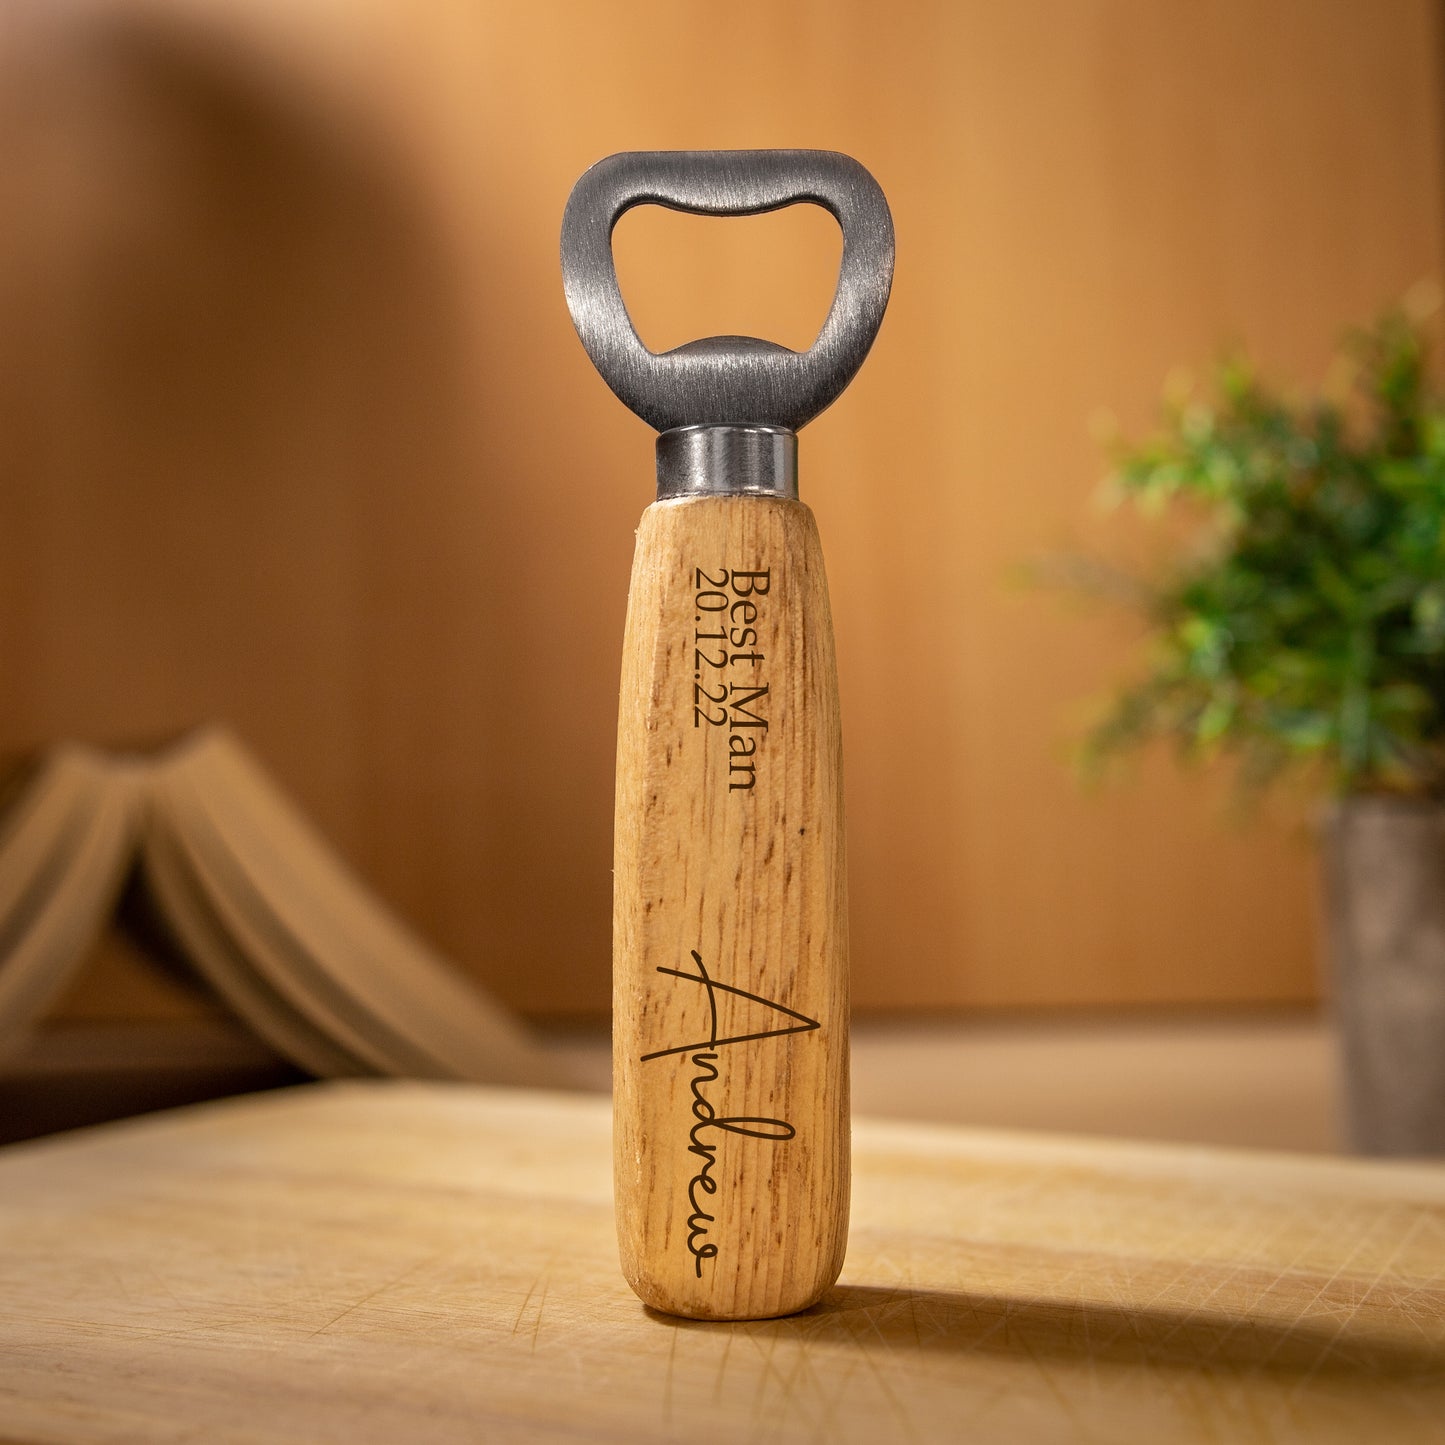 Personalised Engraved Wooden Handle Bottle Opener For Best Man, Groomsman, Father, Usher  - Always Looking Good -   